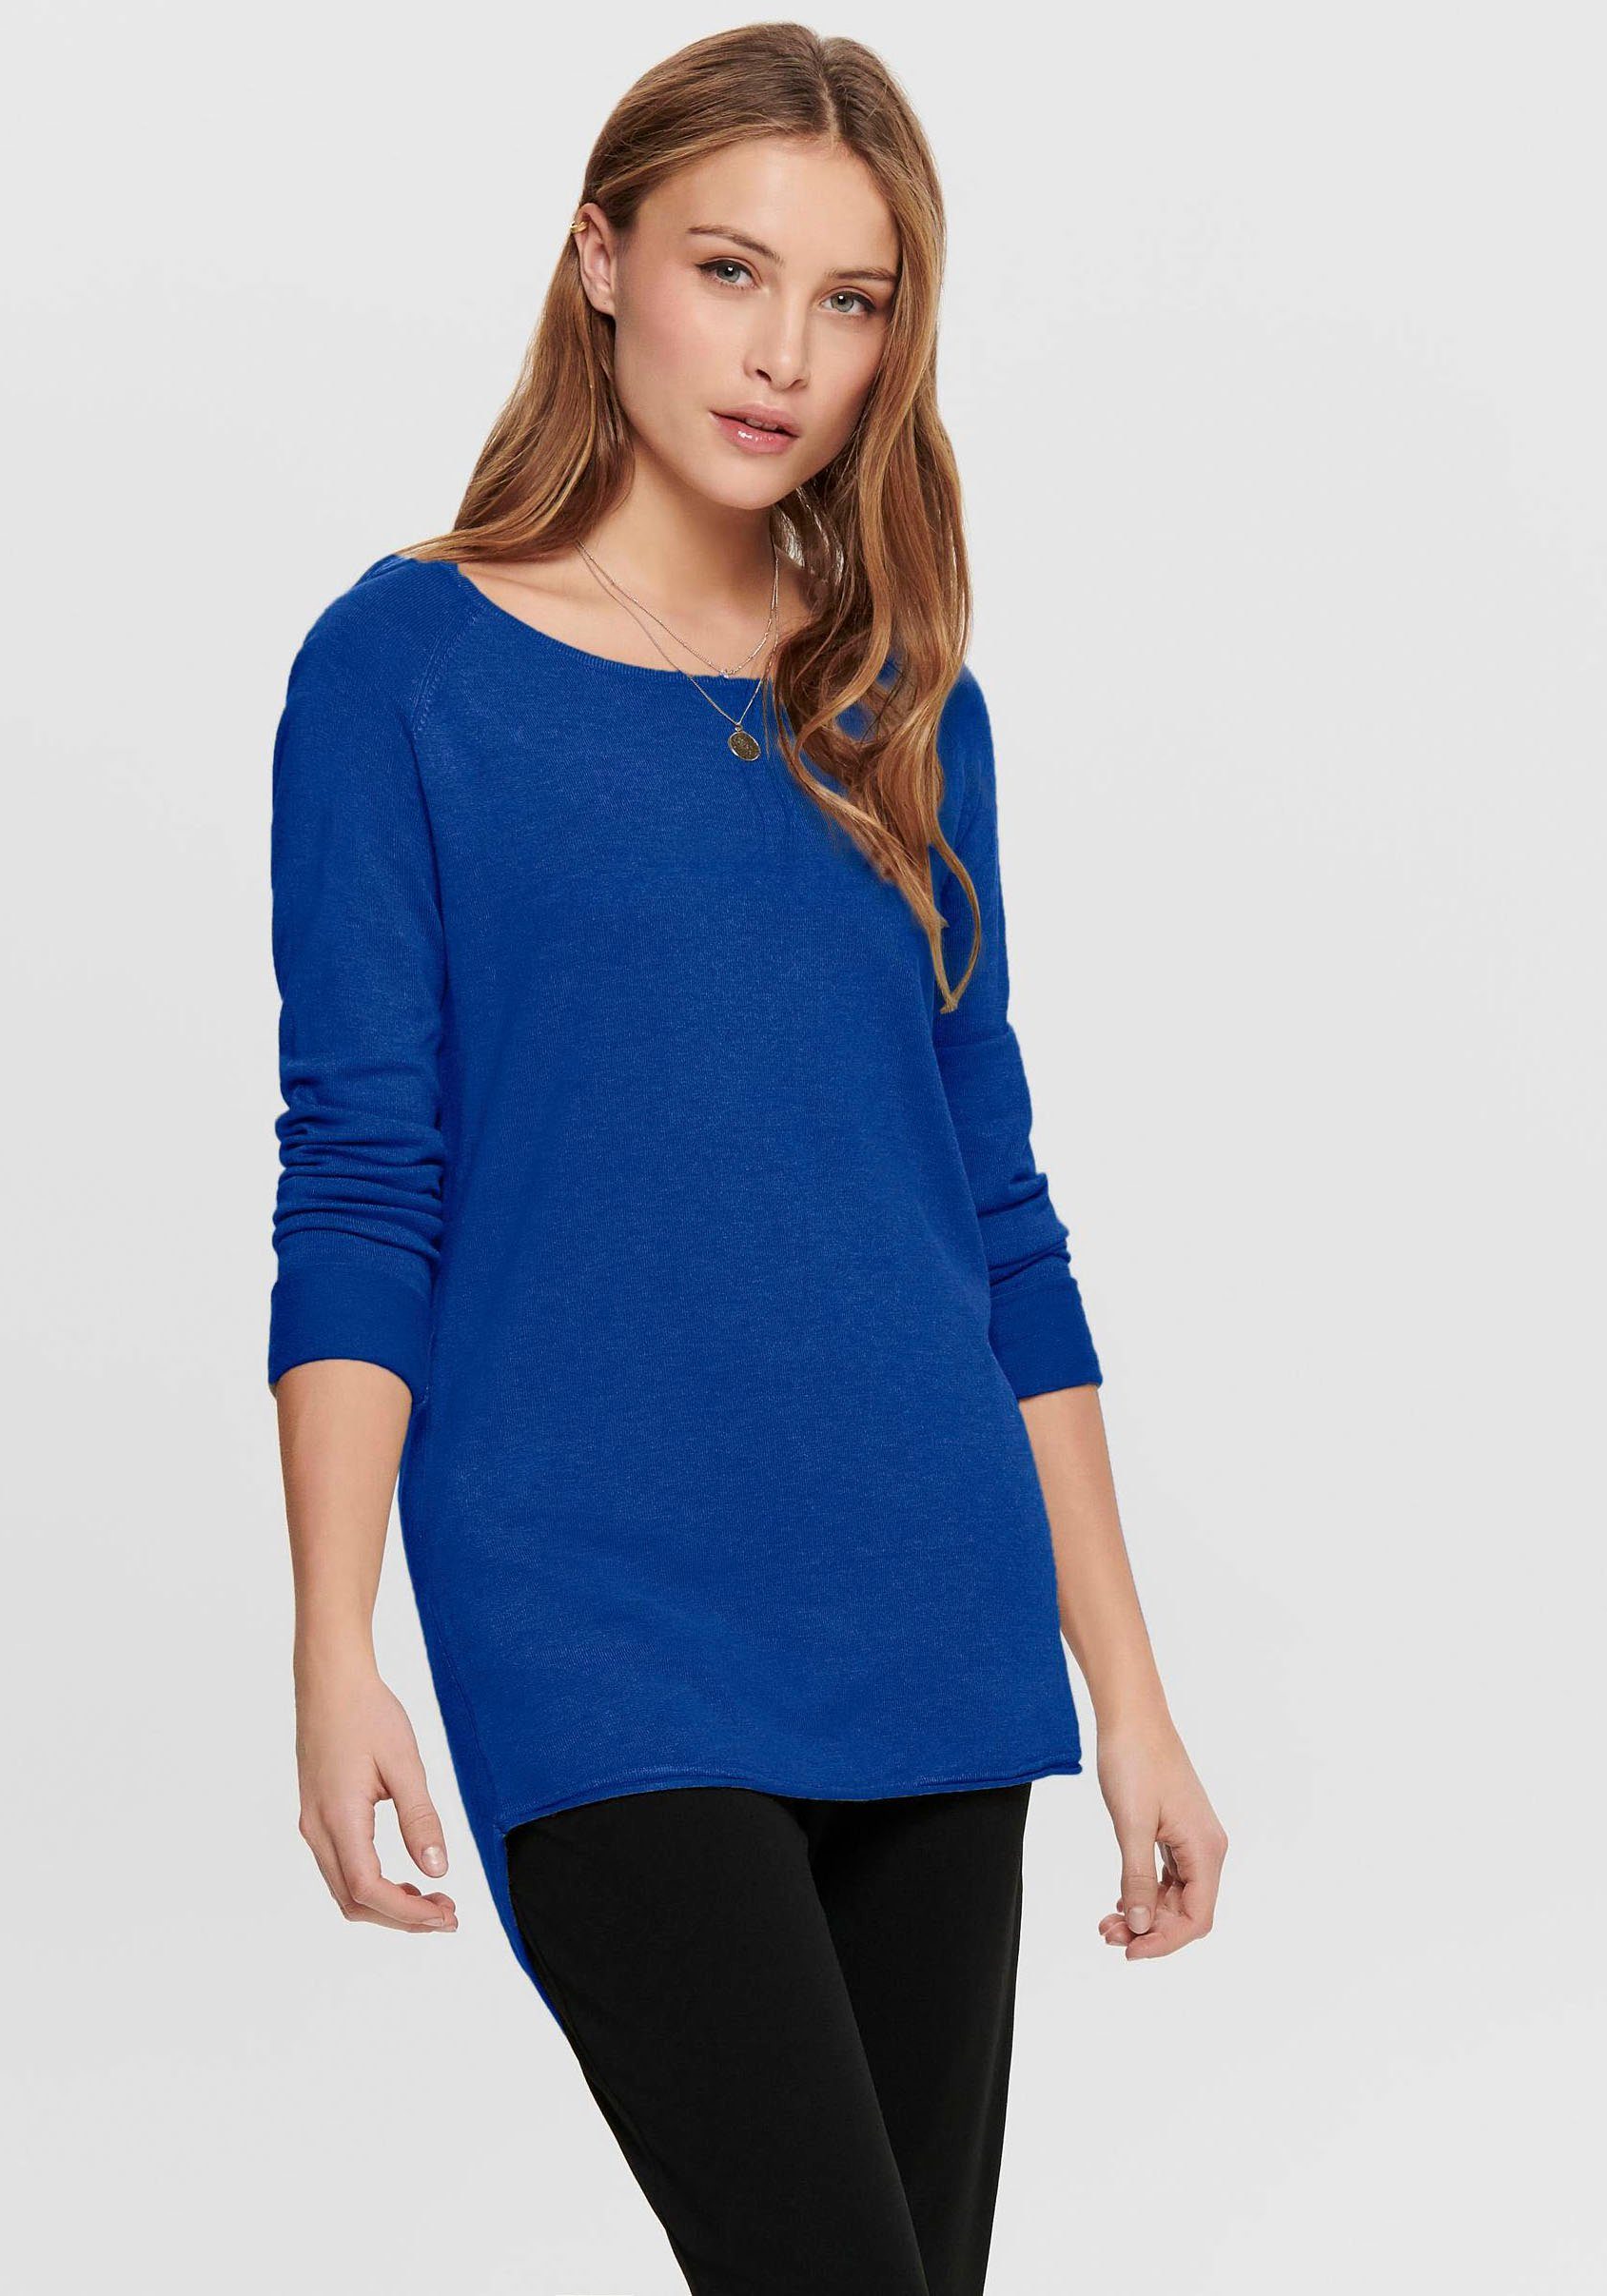 Blaue Longpullover für Damen kaufen » Blaue Longpullis | OTTO